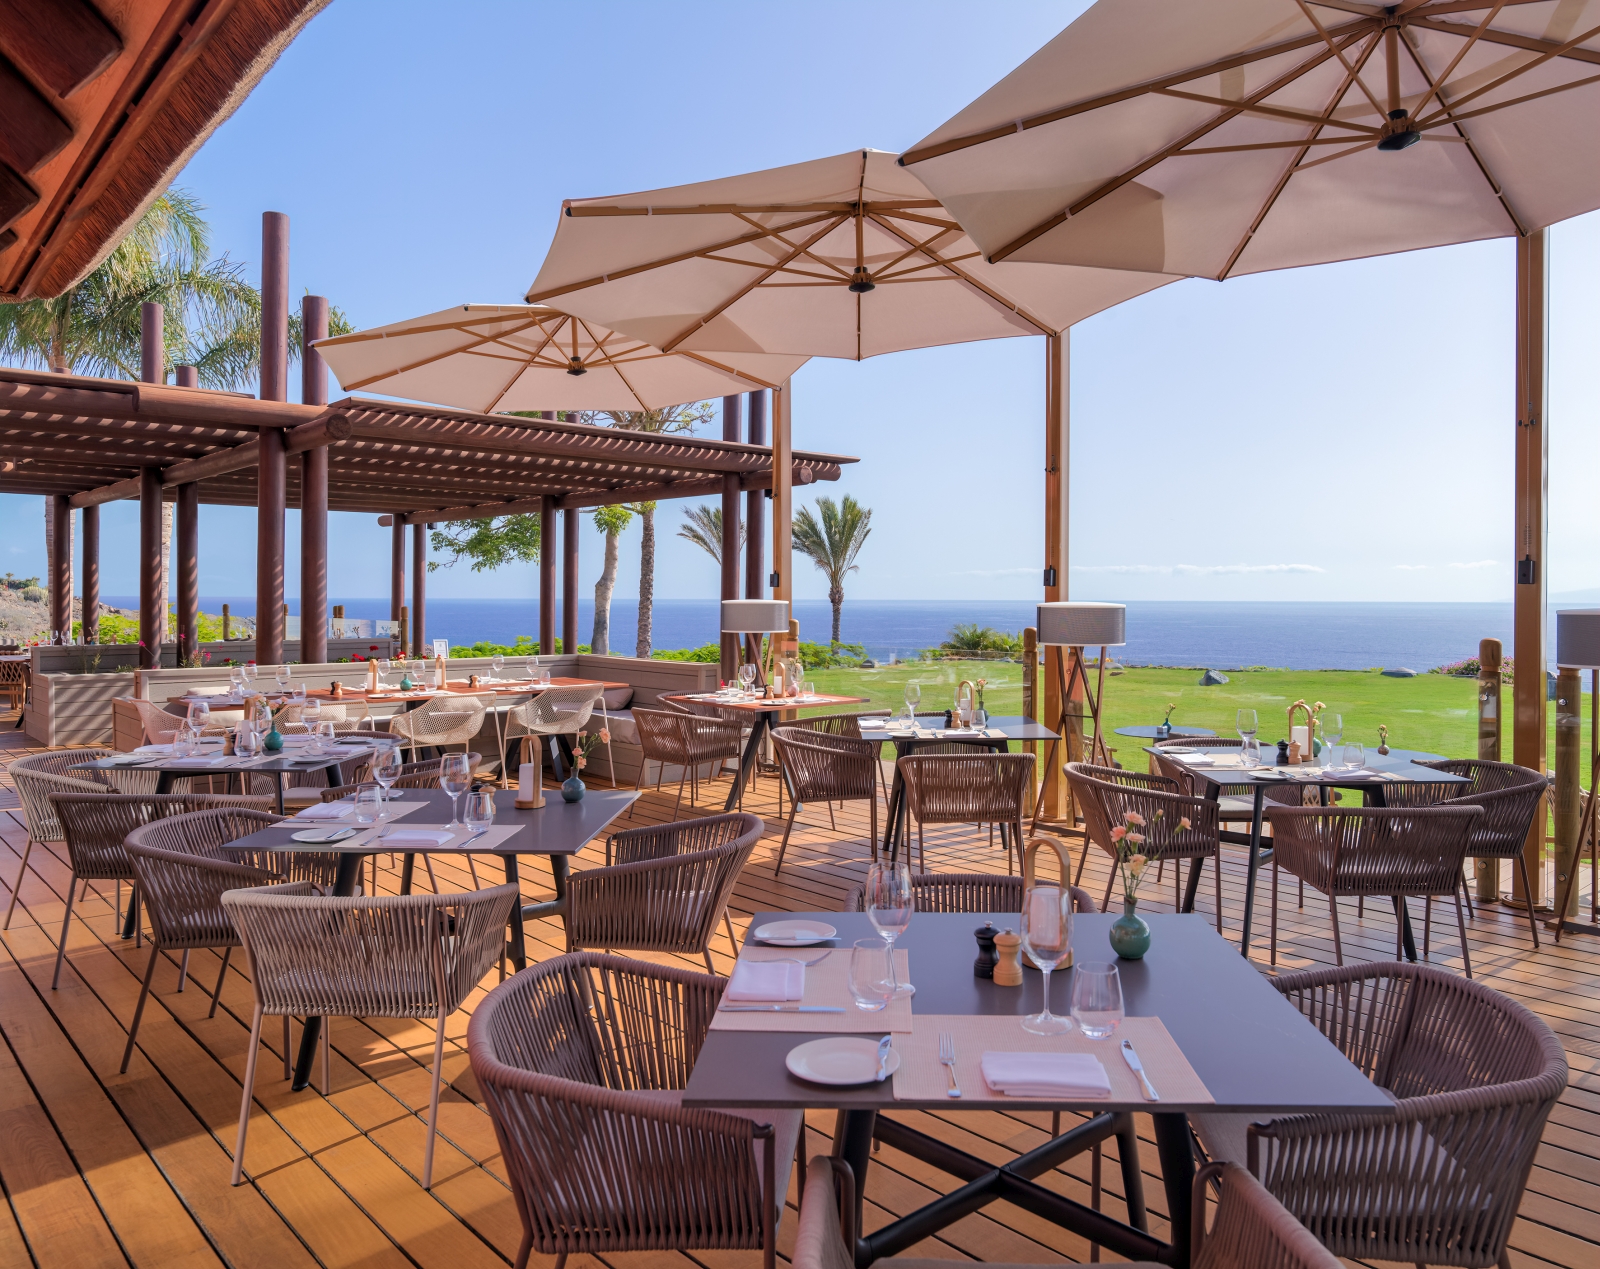 Terrace dining under parasols and with views over the Mediterranean Sea at El Mirador Restaurant at luxury resort Ritz Carlton Abama on Tenerife